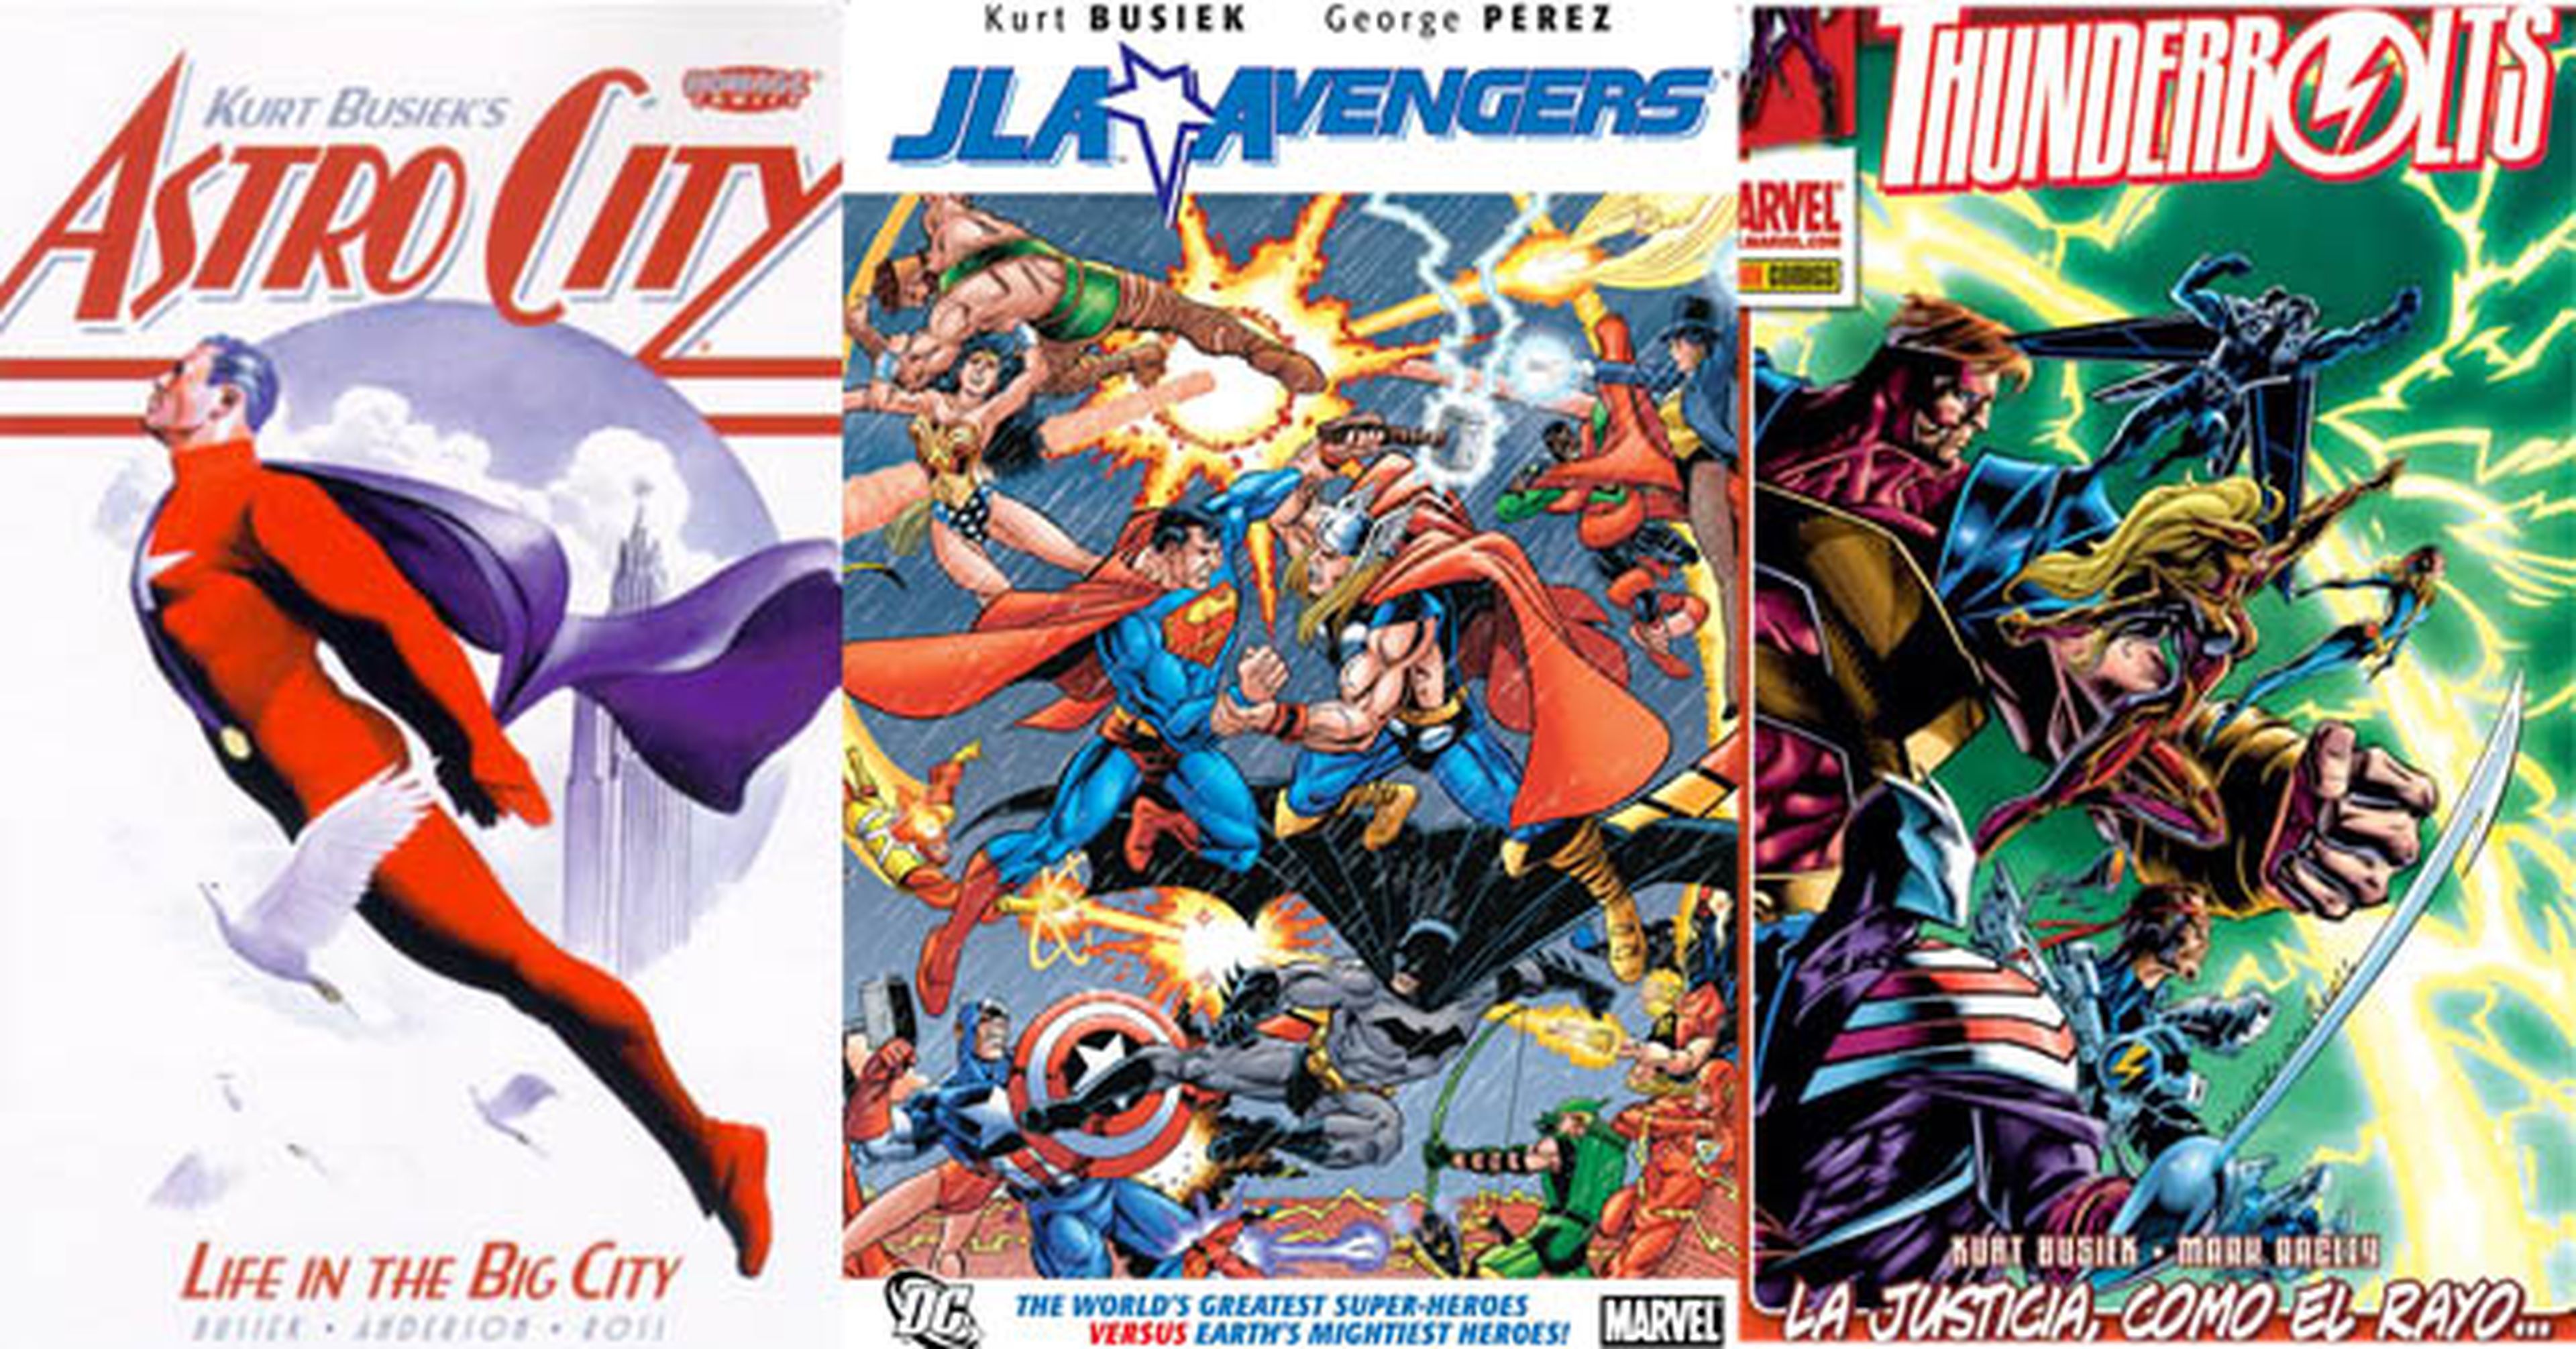 Los mejores cómics: Marvels, de Ross y Busiek